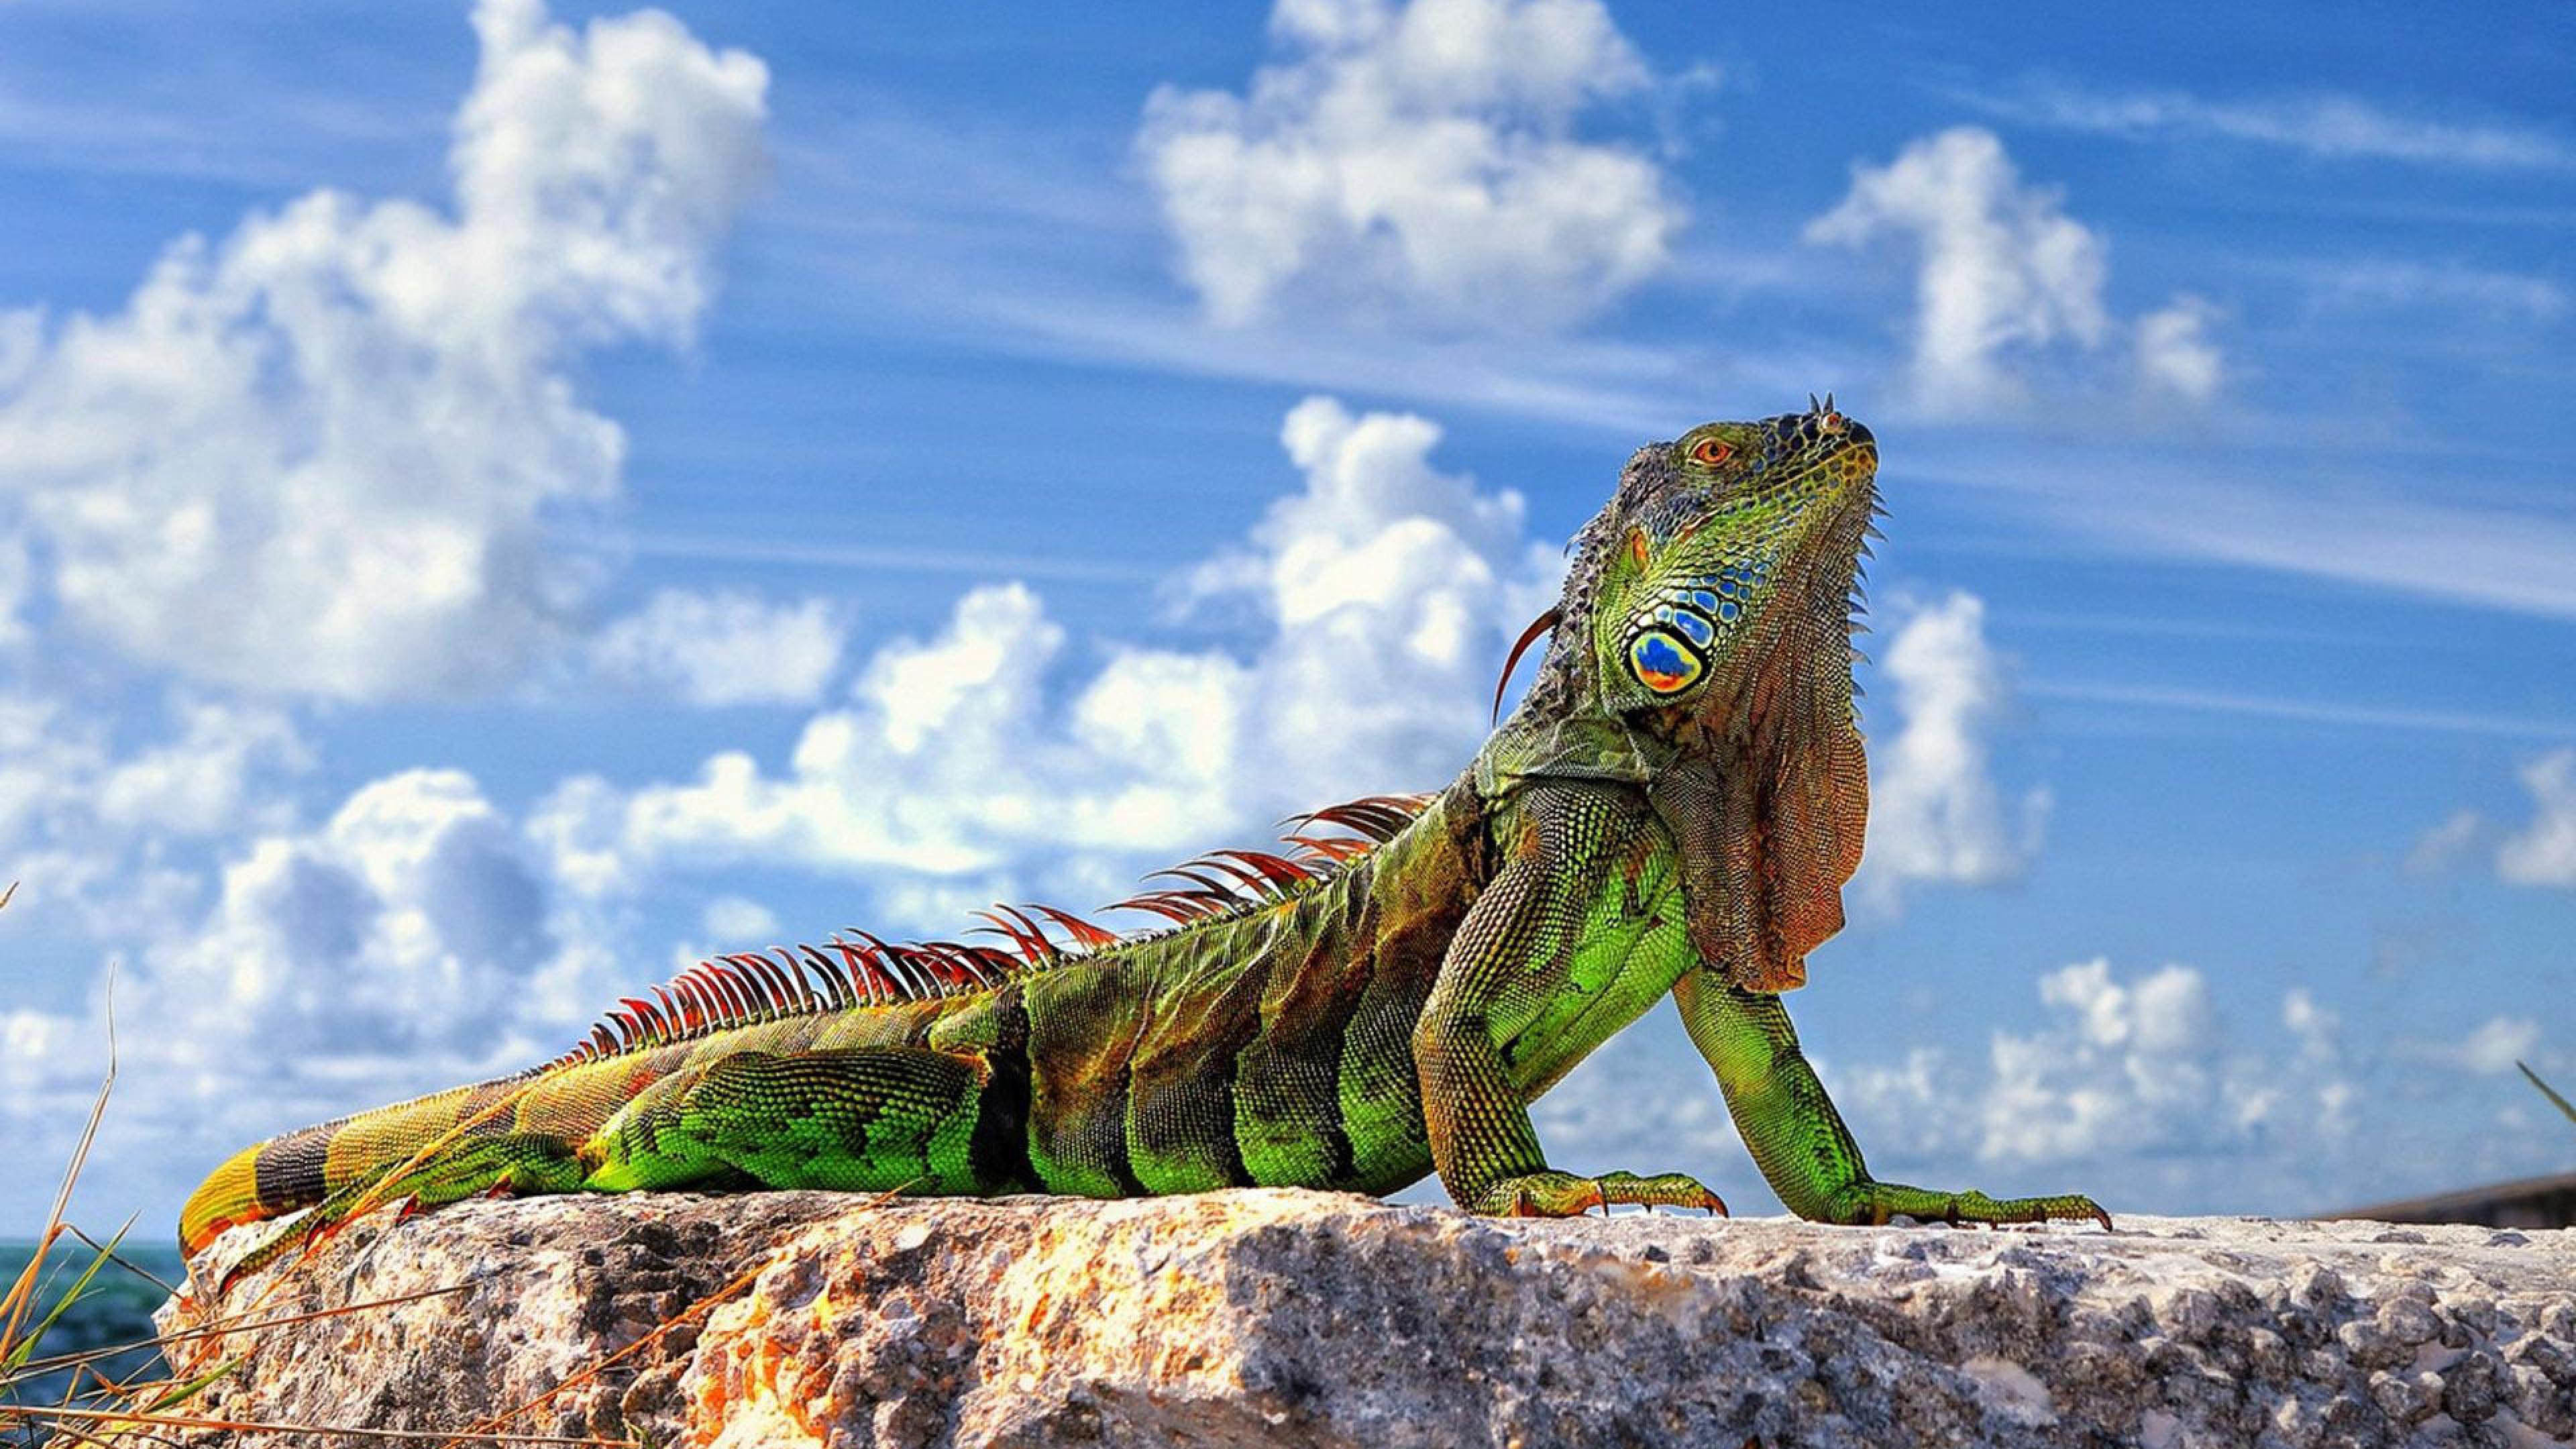 Iguana wallpaper, Detailed close-up, Reptilian beauty, Nature background, 3840x2160 4K Desktop